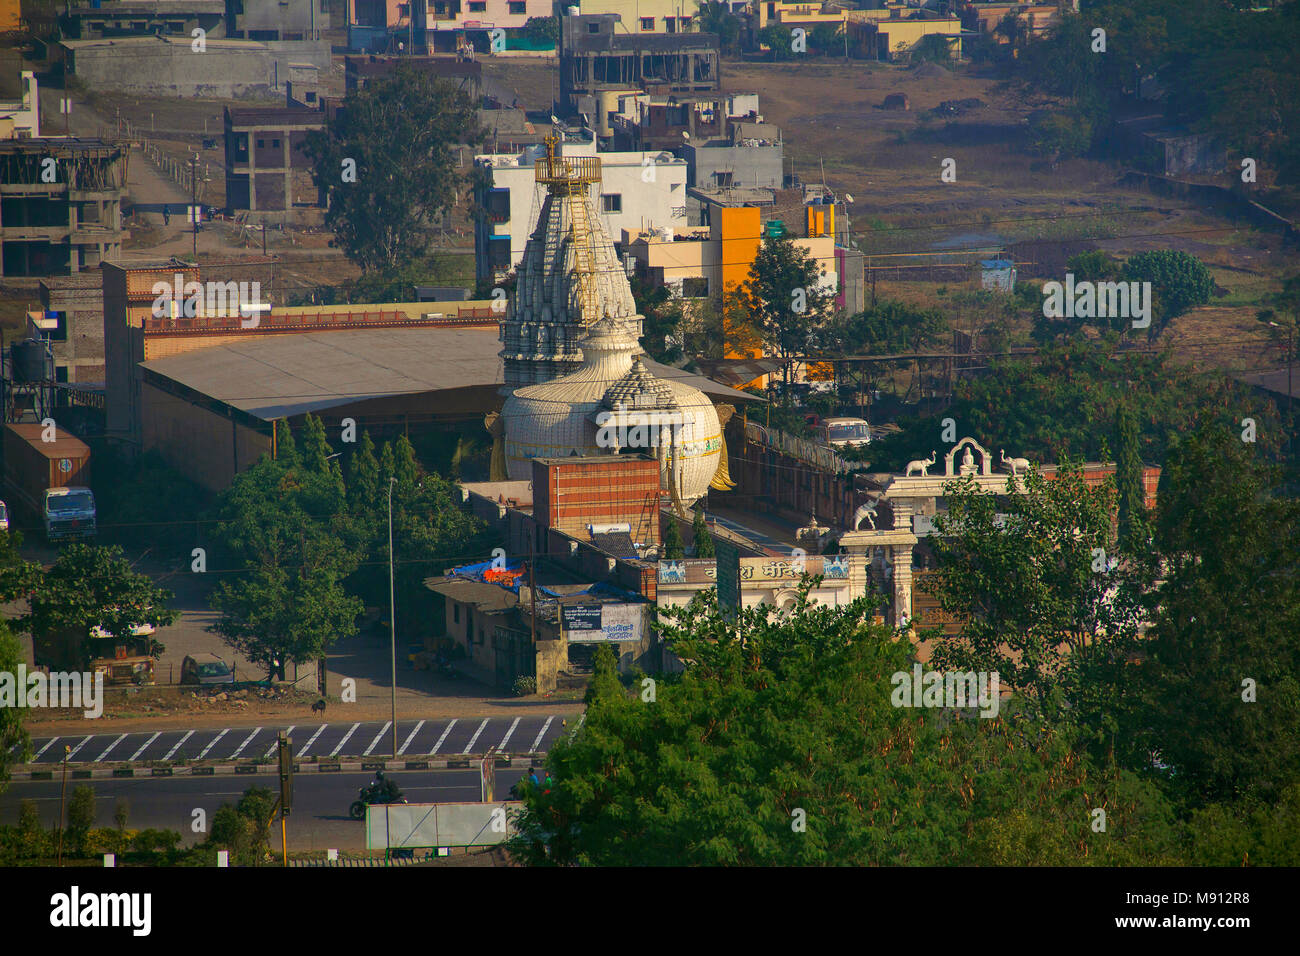 Vista aérea y disparos largos de Shree Shankheshwar Parshnath Tirth - templo Jain Kalash, el templo en forma de kalash, Somatane Plaza de Peaje, en Pune Talwade Foto de stock